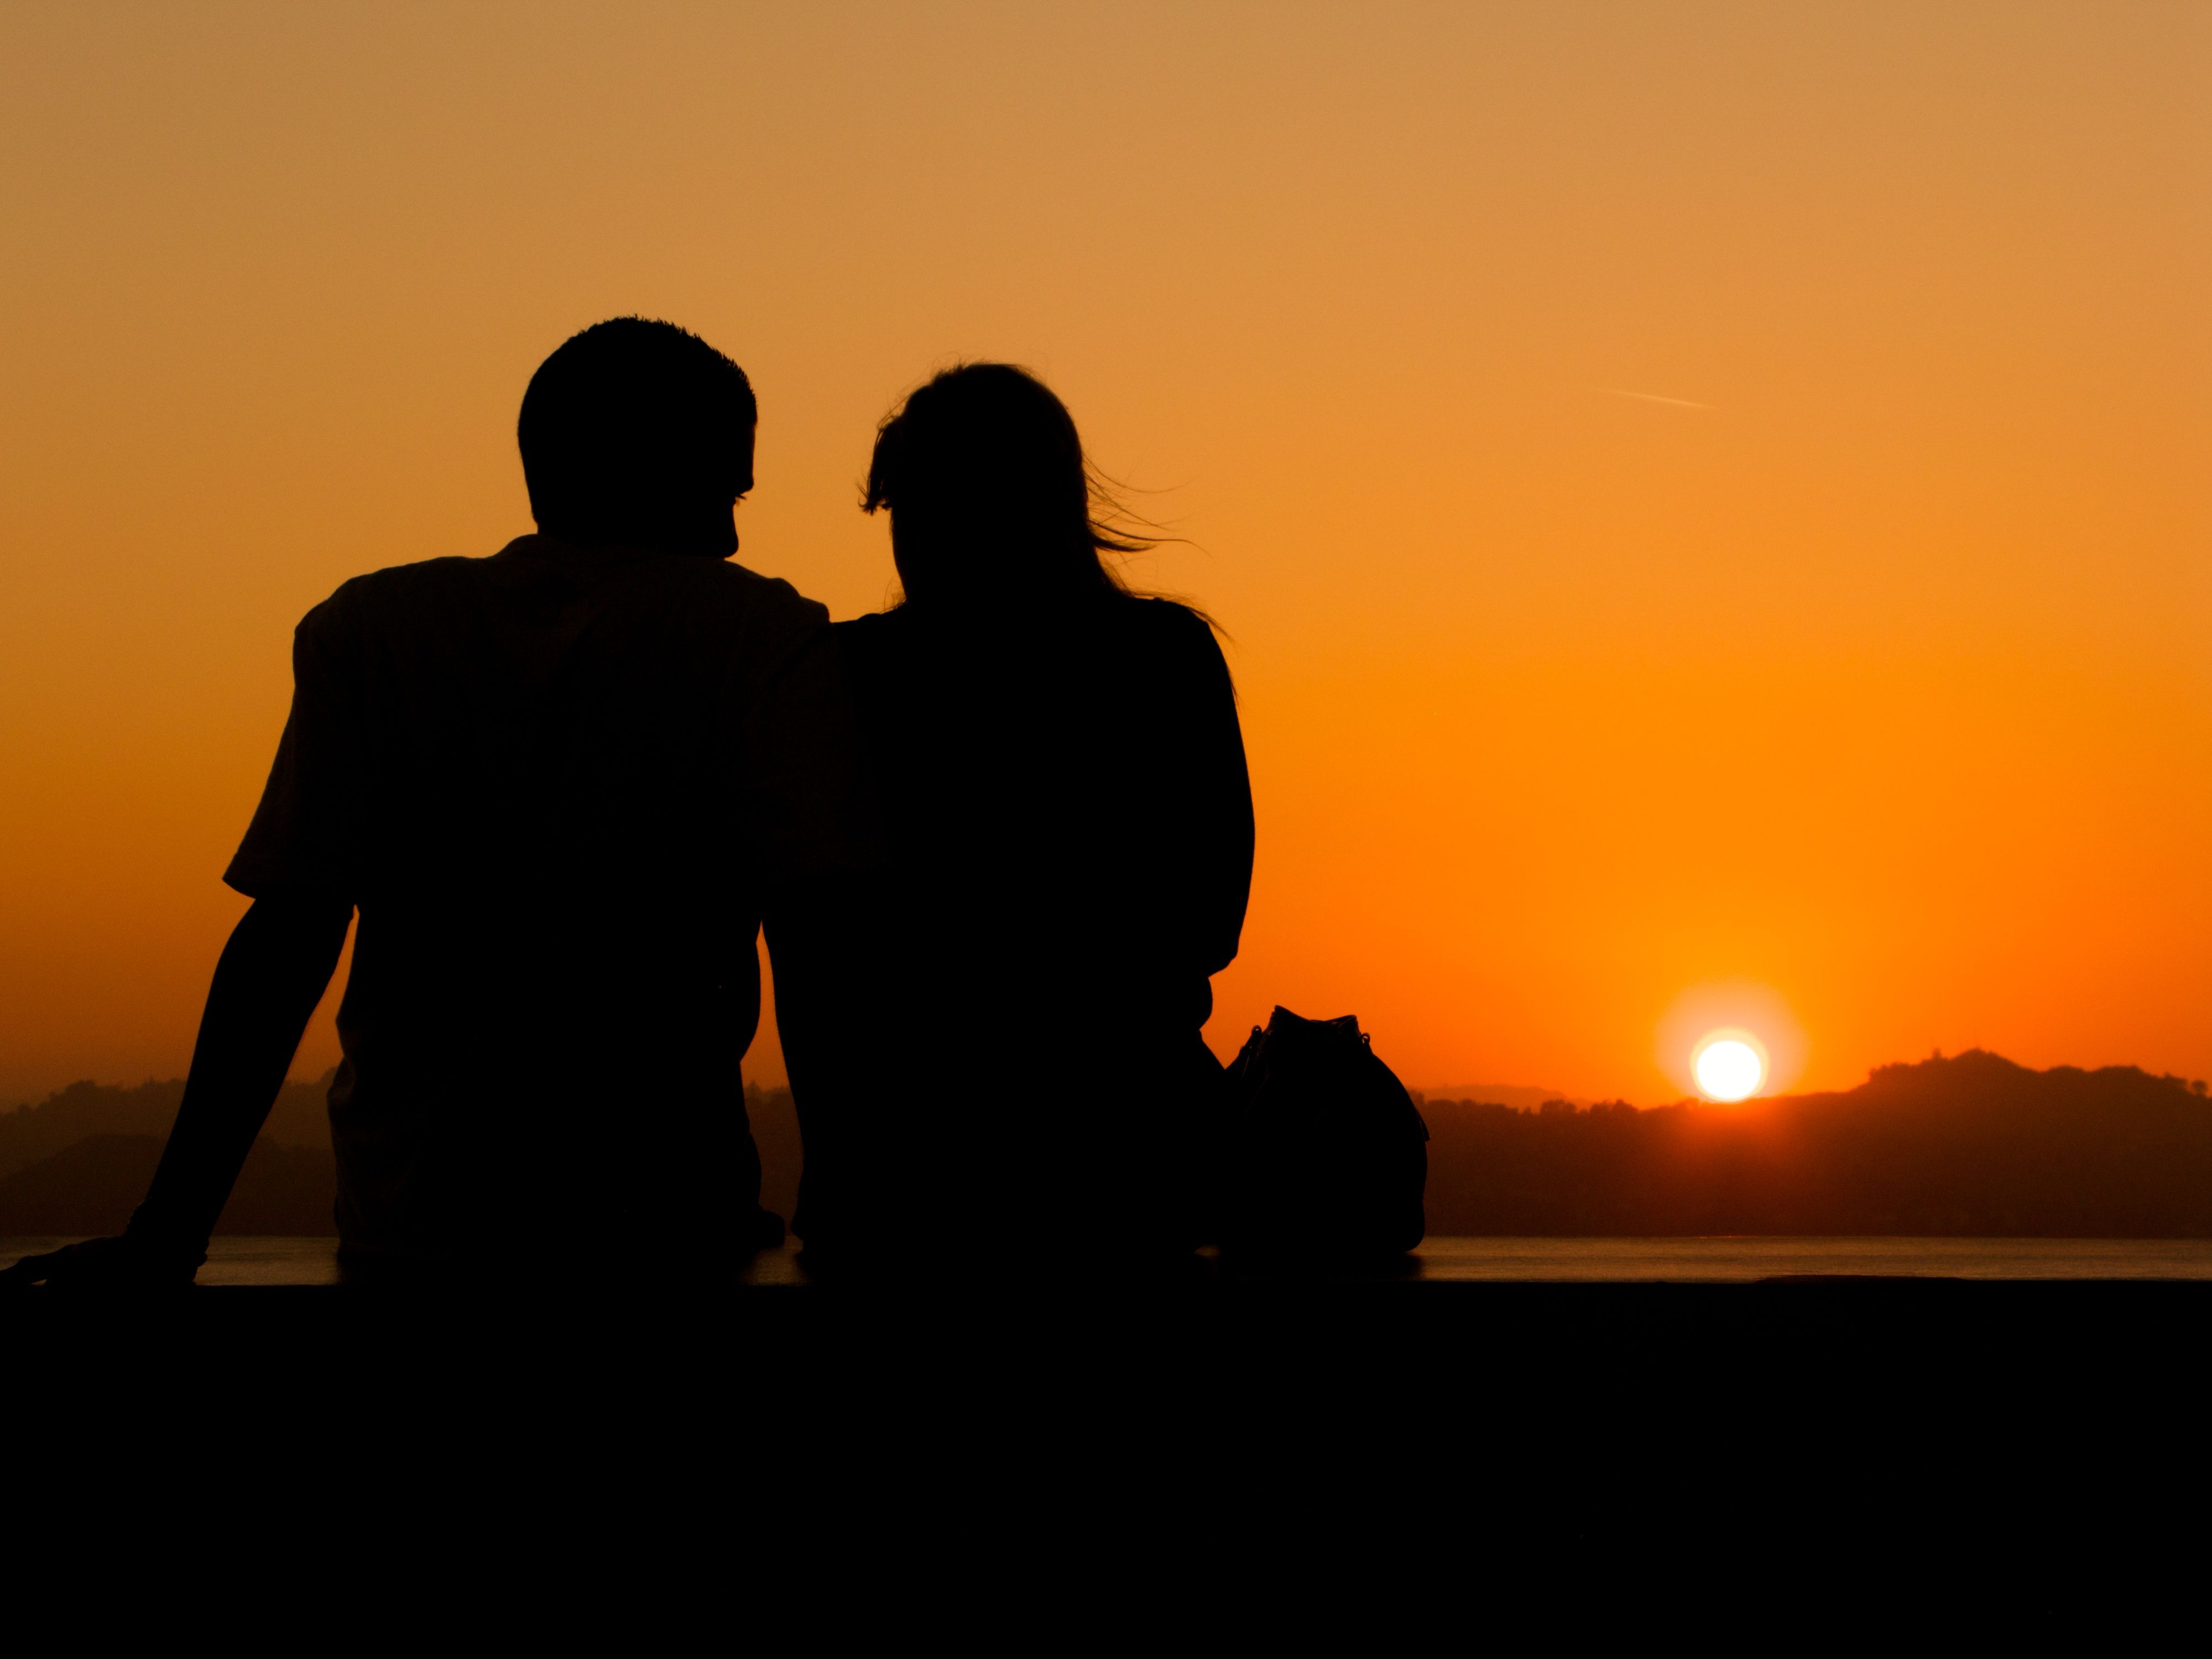 Scenery Image: Sunset Image With Couple